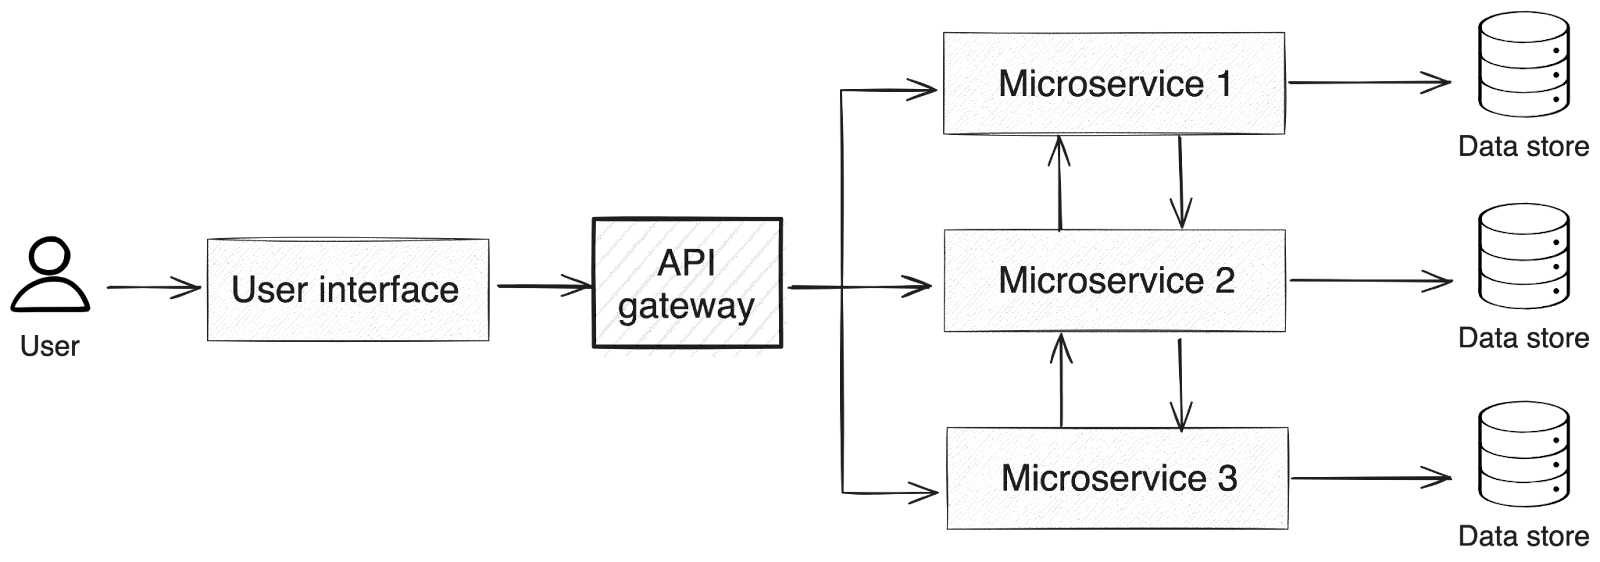 Microservices architecture diagram